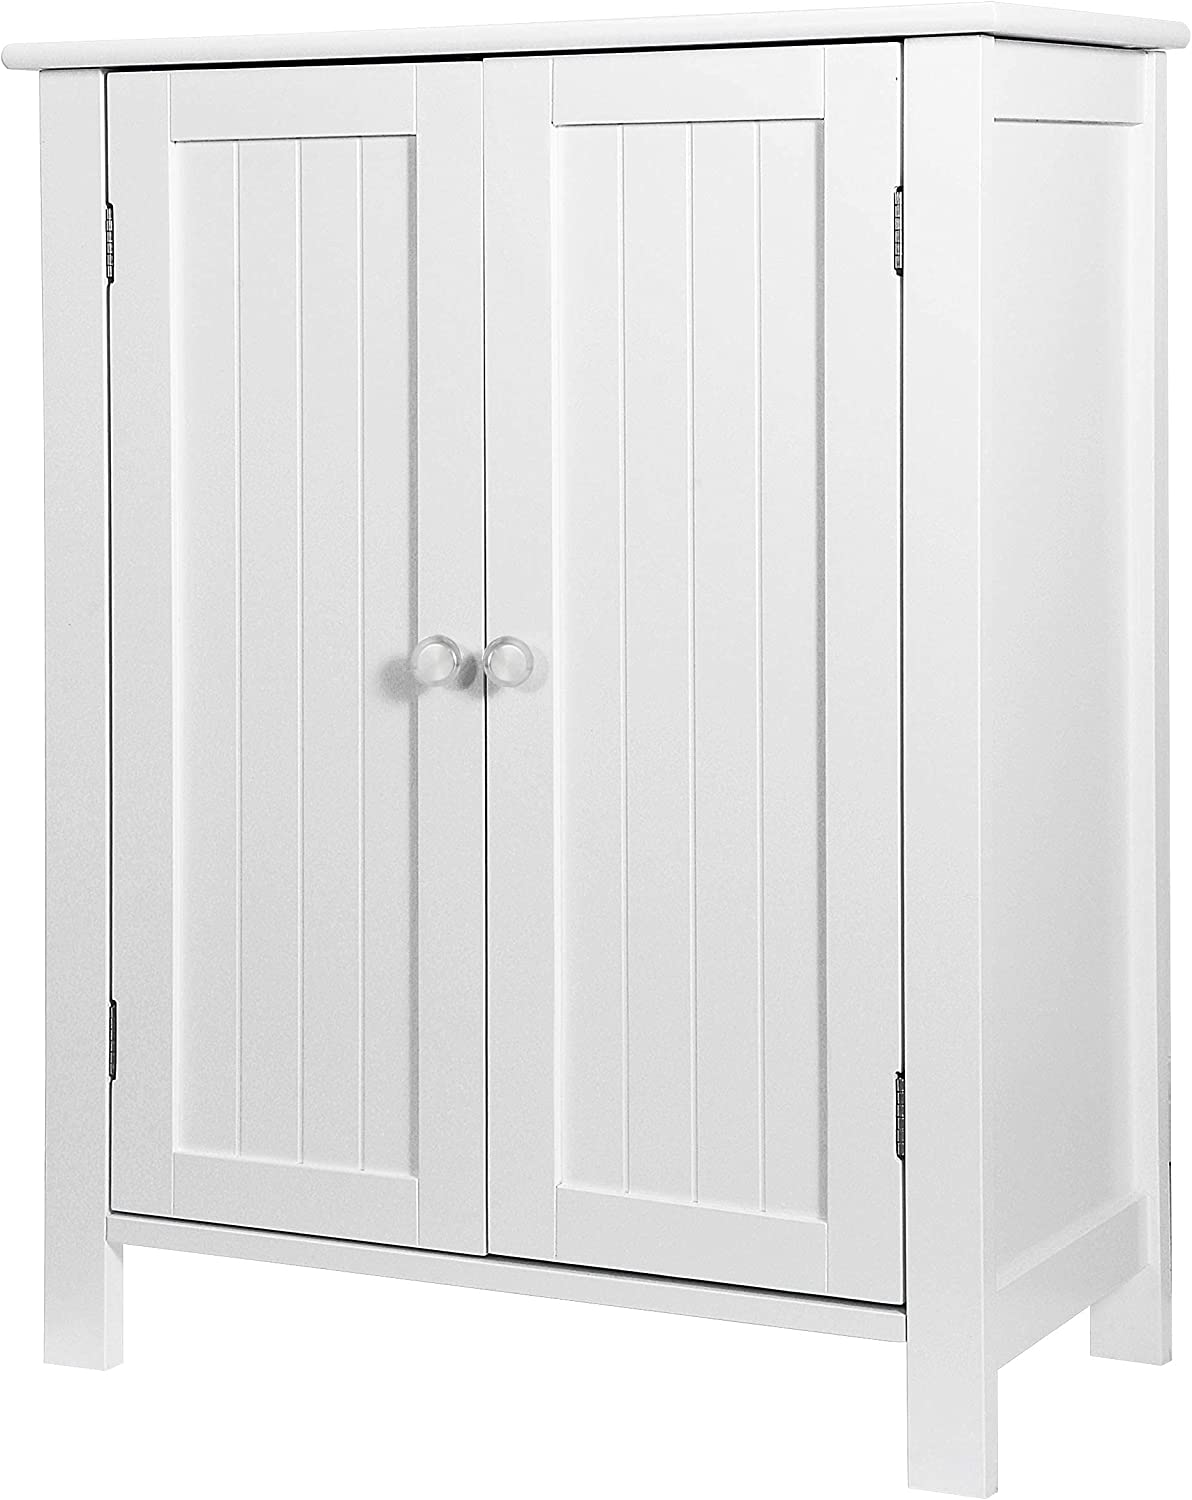 Bathroom Floor Storage Cabinet with Double Door + Adjustable Shelf, Wooden Organizer Cabinet for Living Room, Bathroom, Bedroom, Modern Home Furniture, White